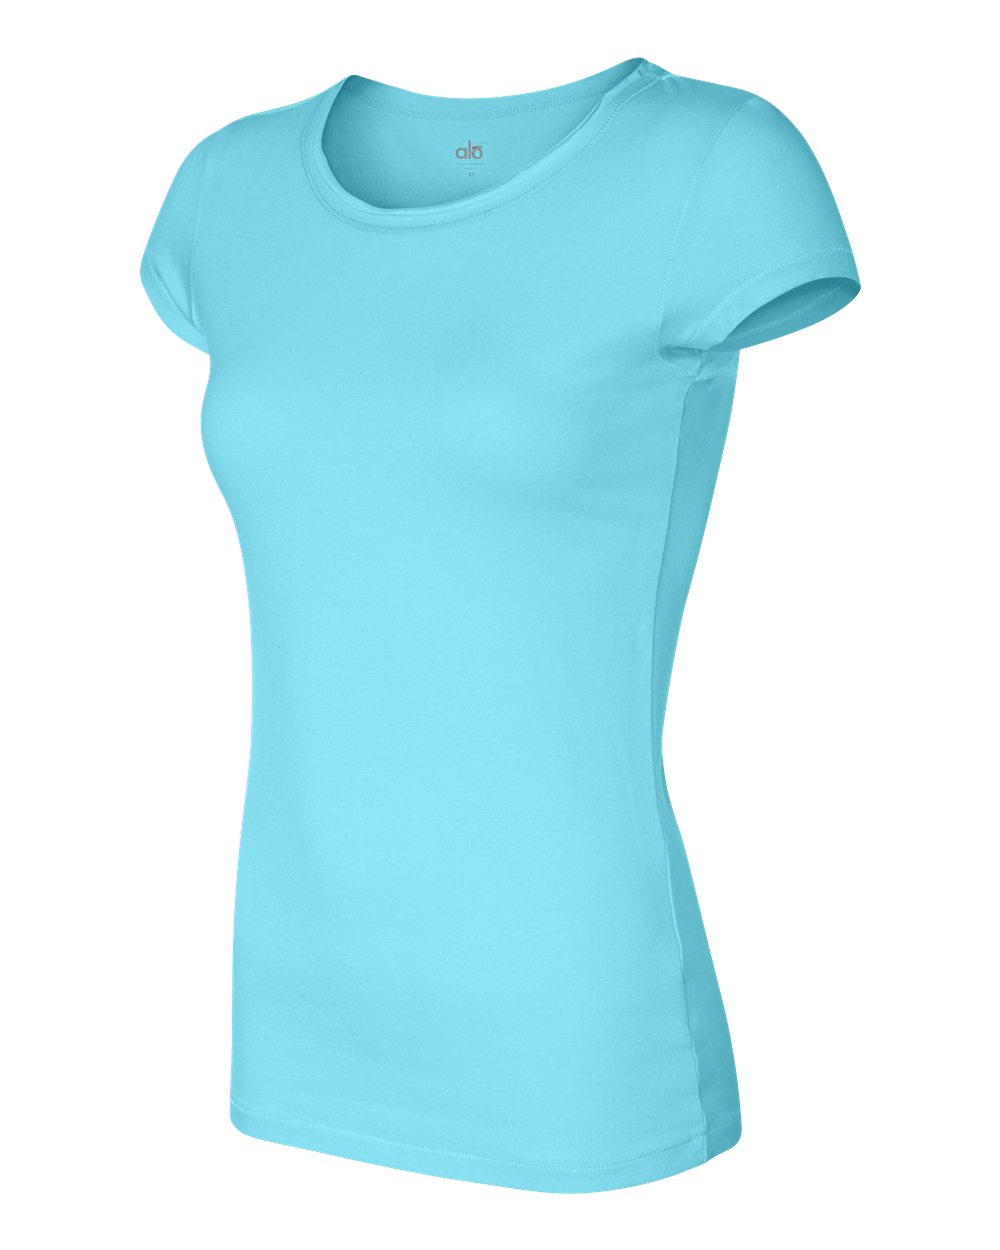 alo - Ladies' Short Sleeve Bamboo T-Shirt $12.89